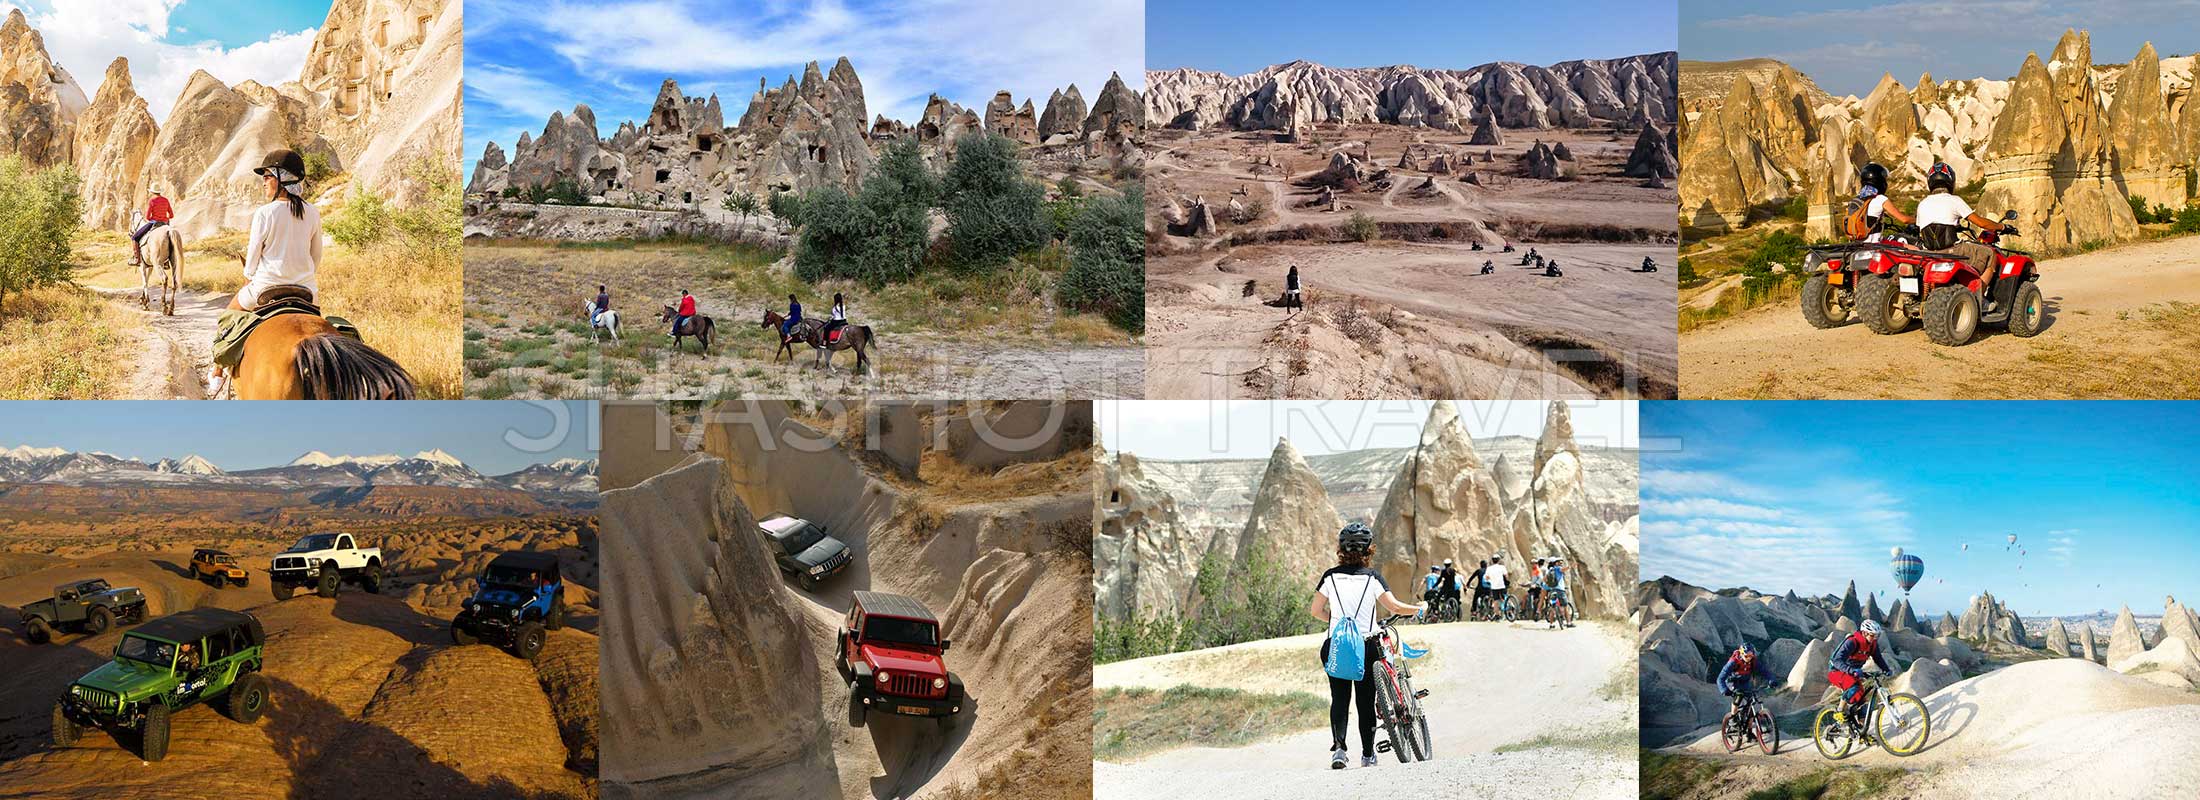 cappadocia-alternative-outdoor-tours-Horse-Riding-atv-jeep-safari-Cycling-Tours-turkey-shashot-travel